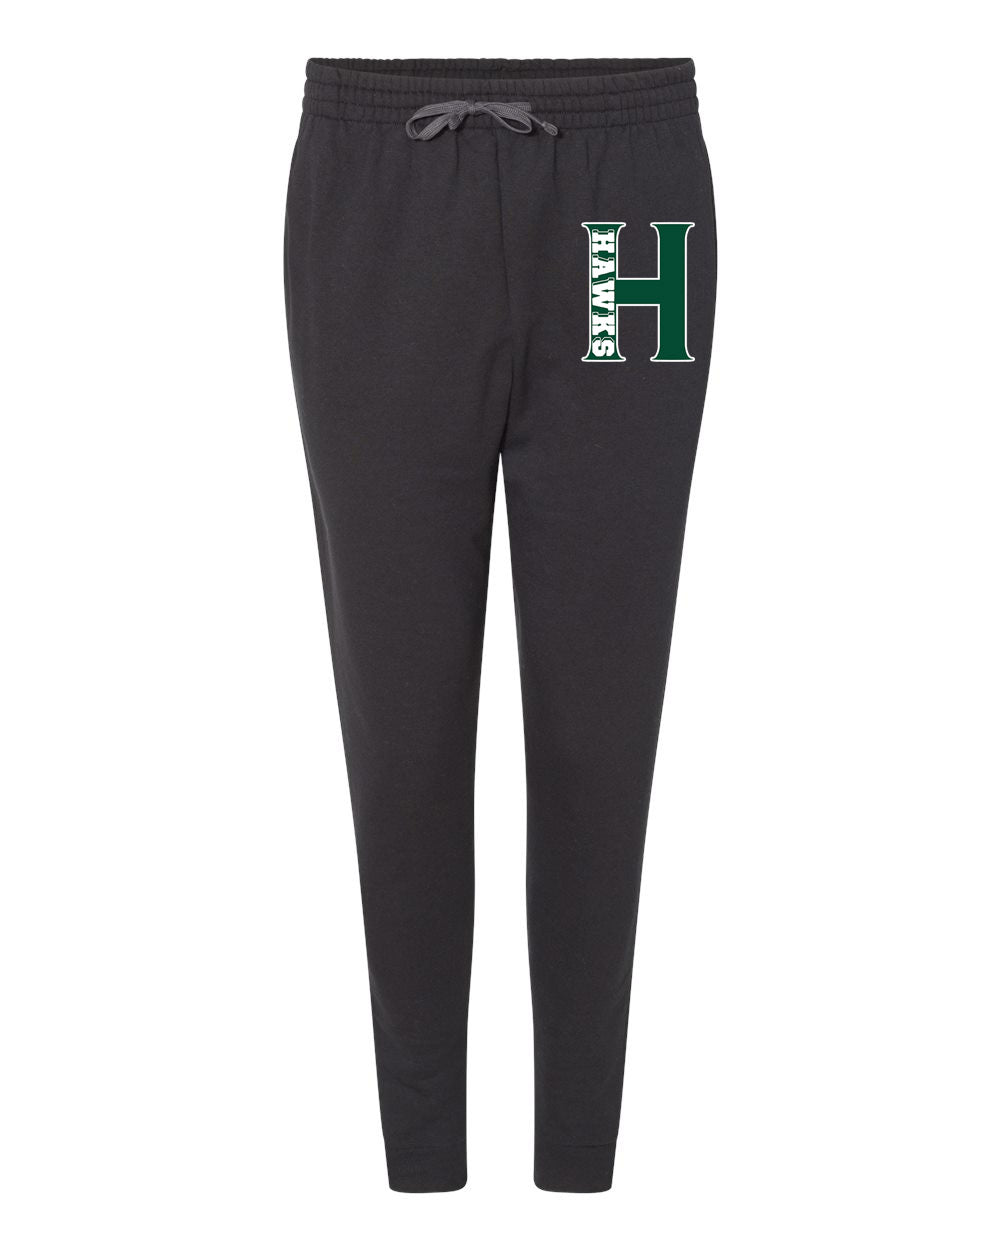 Hilltop Country Day School design 5 Sweatpants